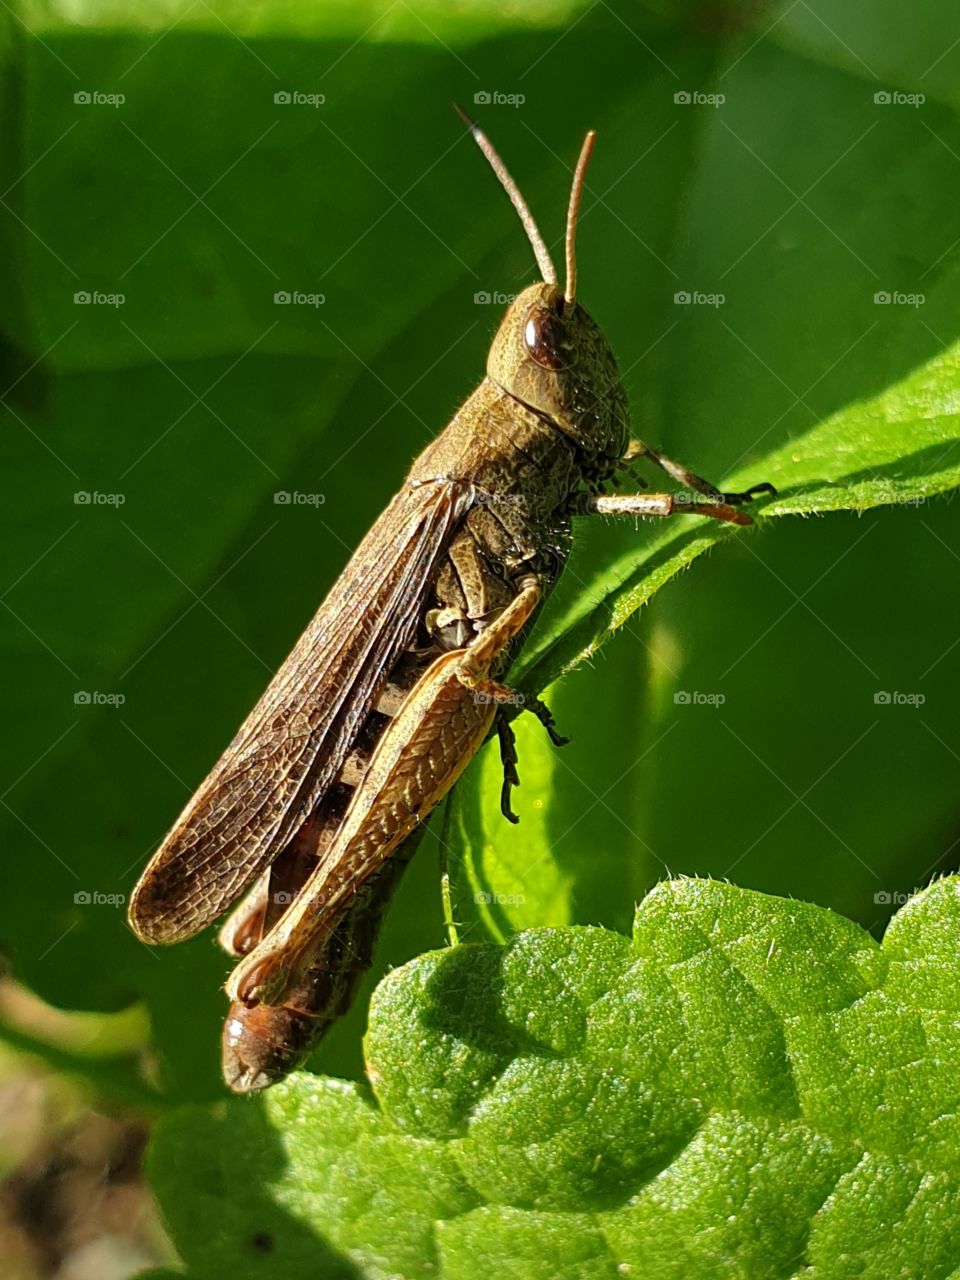 A grasshopper on a green leaf. Closeup.